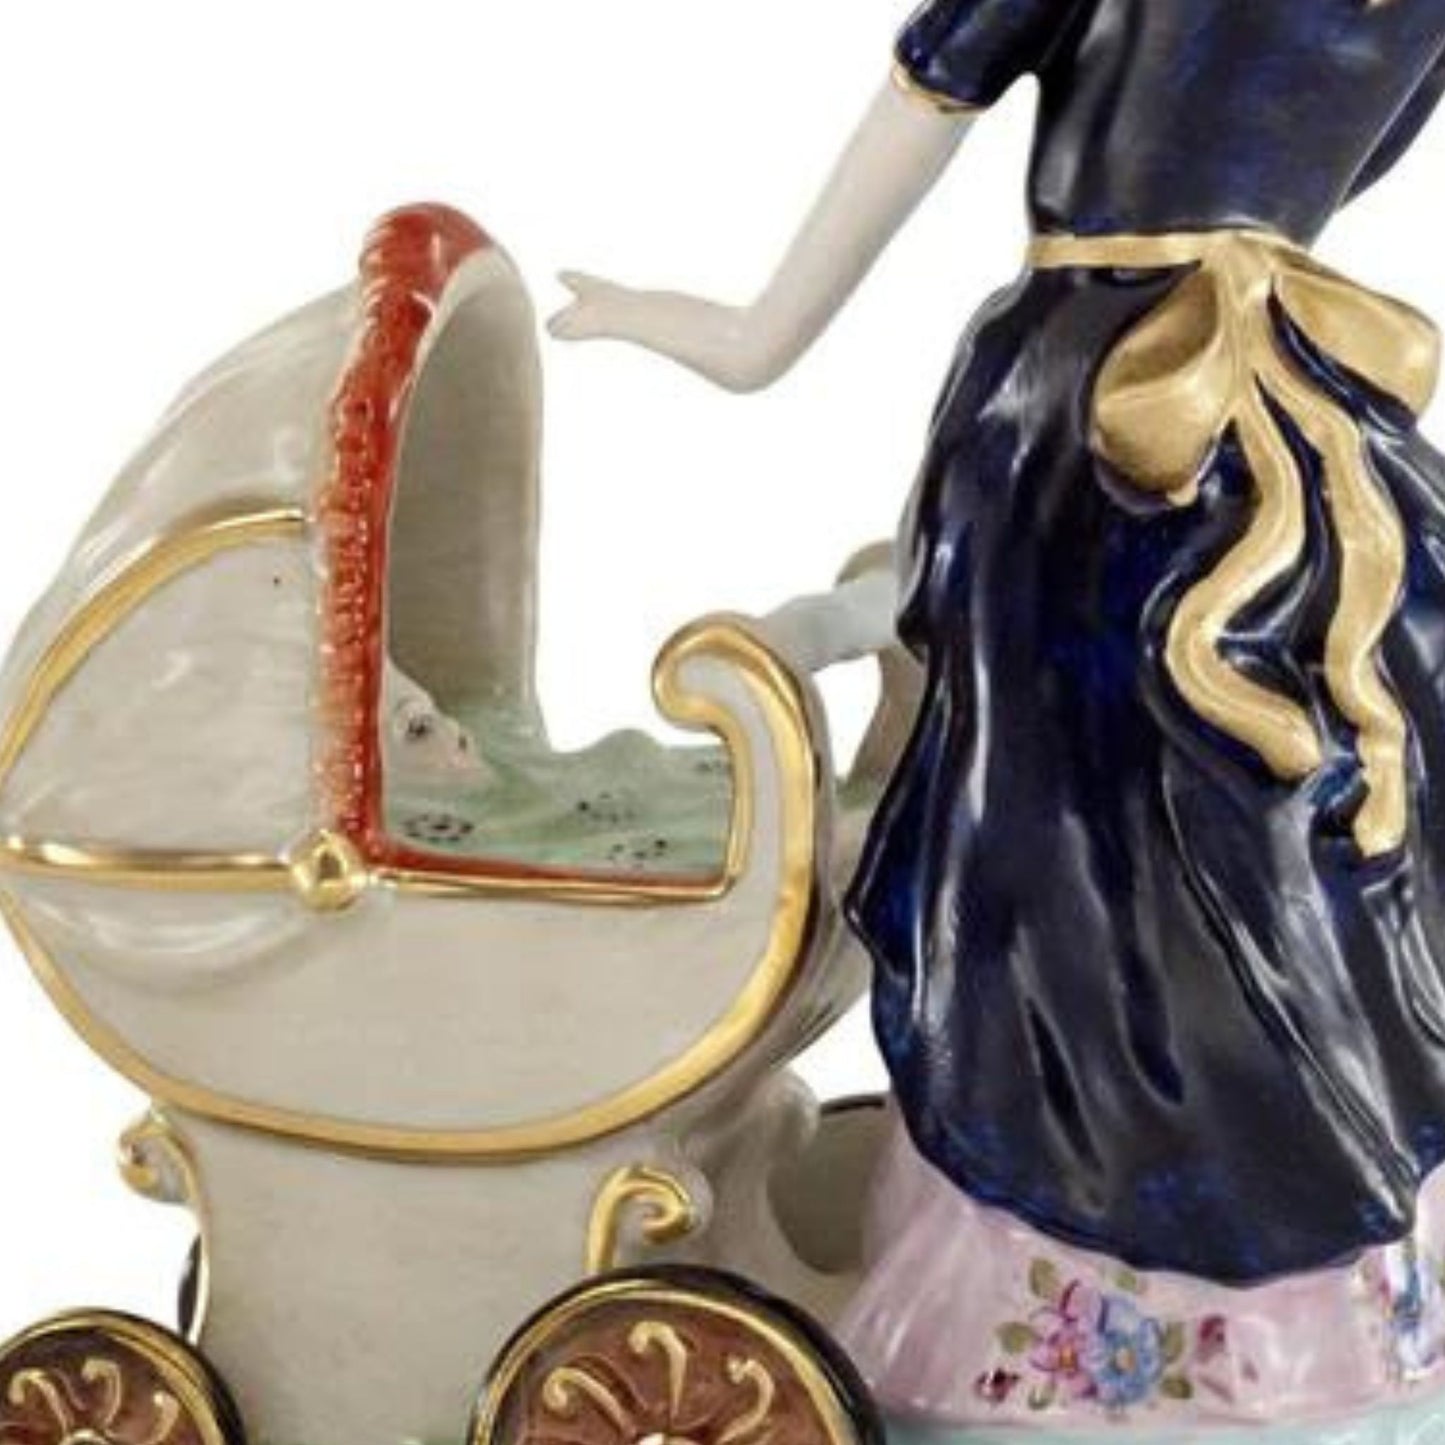 Mother With Stroller Porcelain Figurine